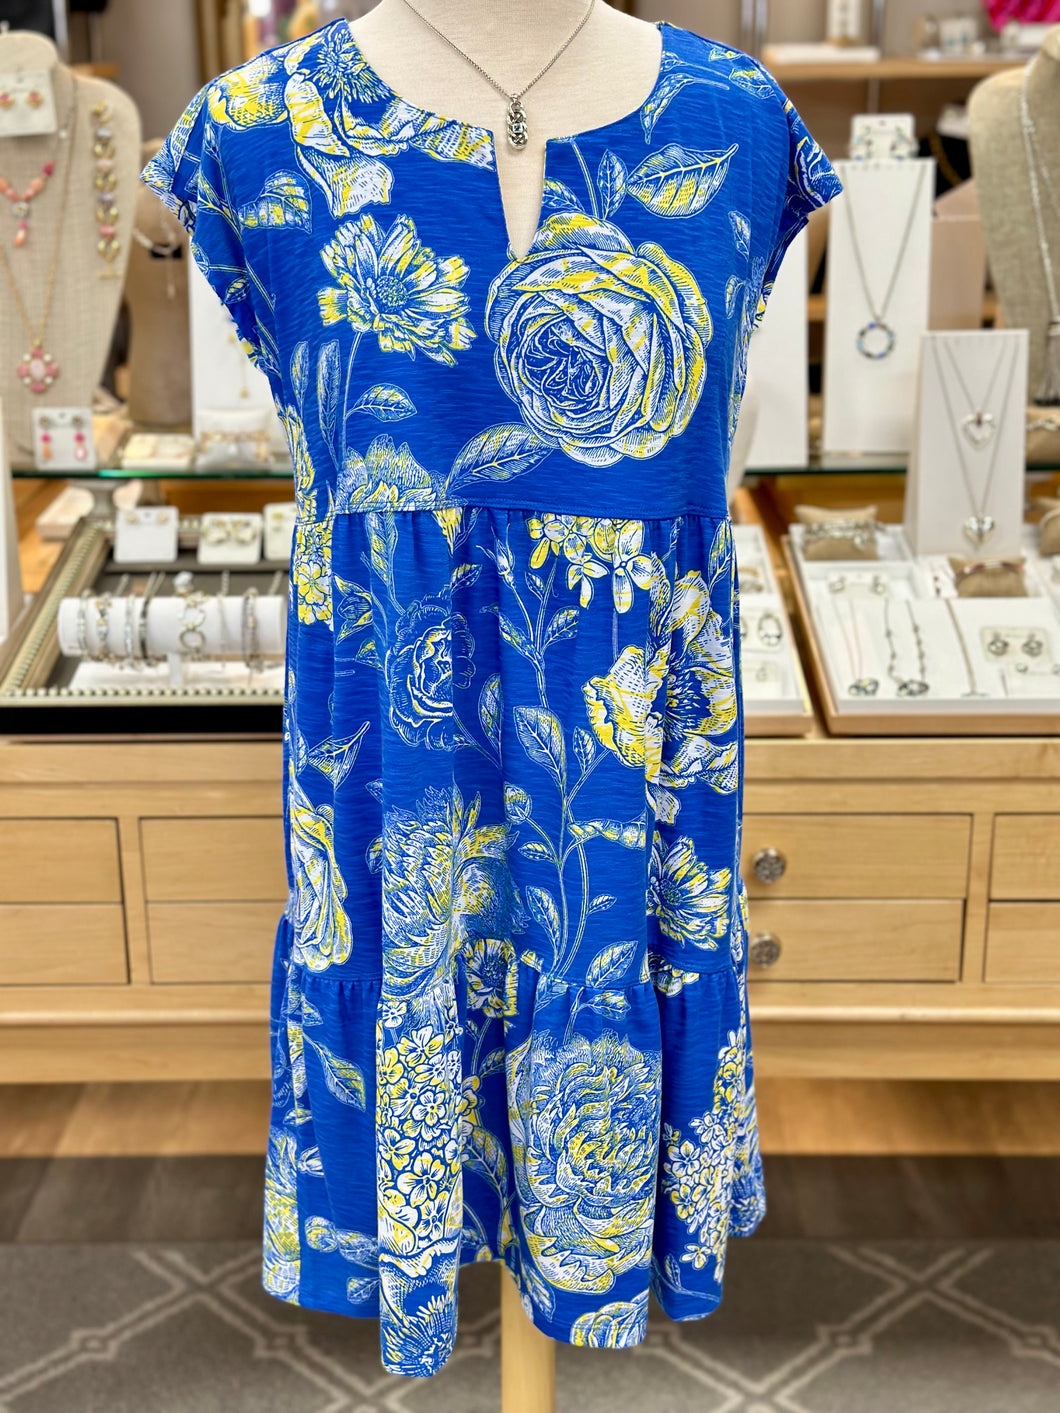 Multiples Blue Floral Print Dress